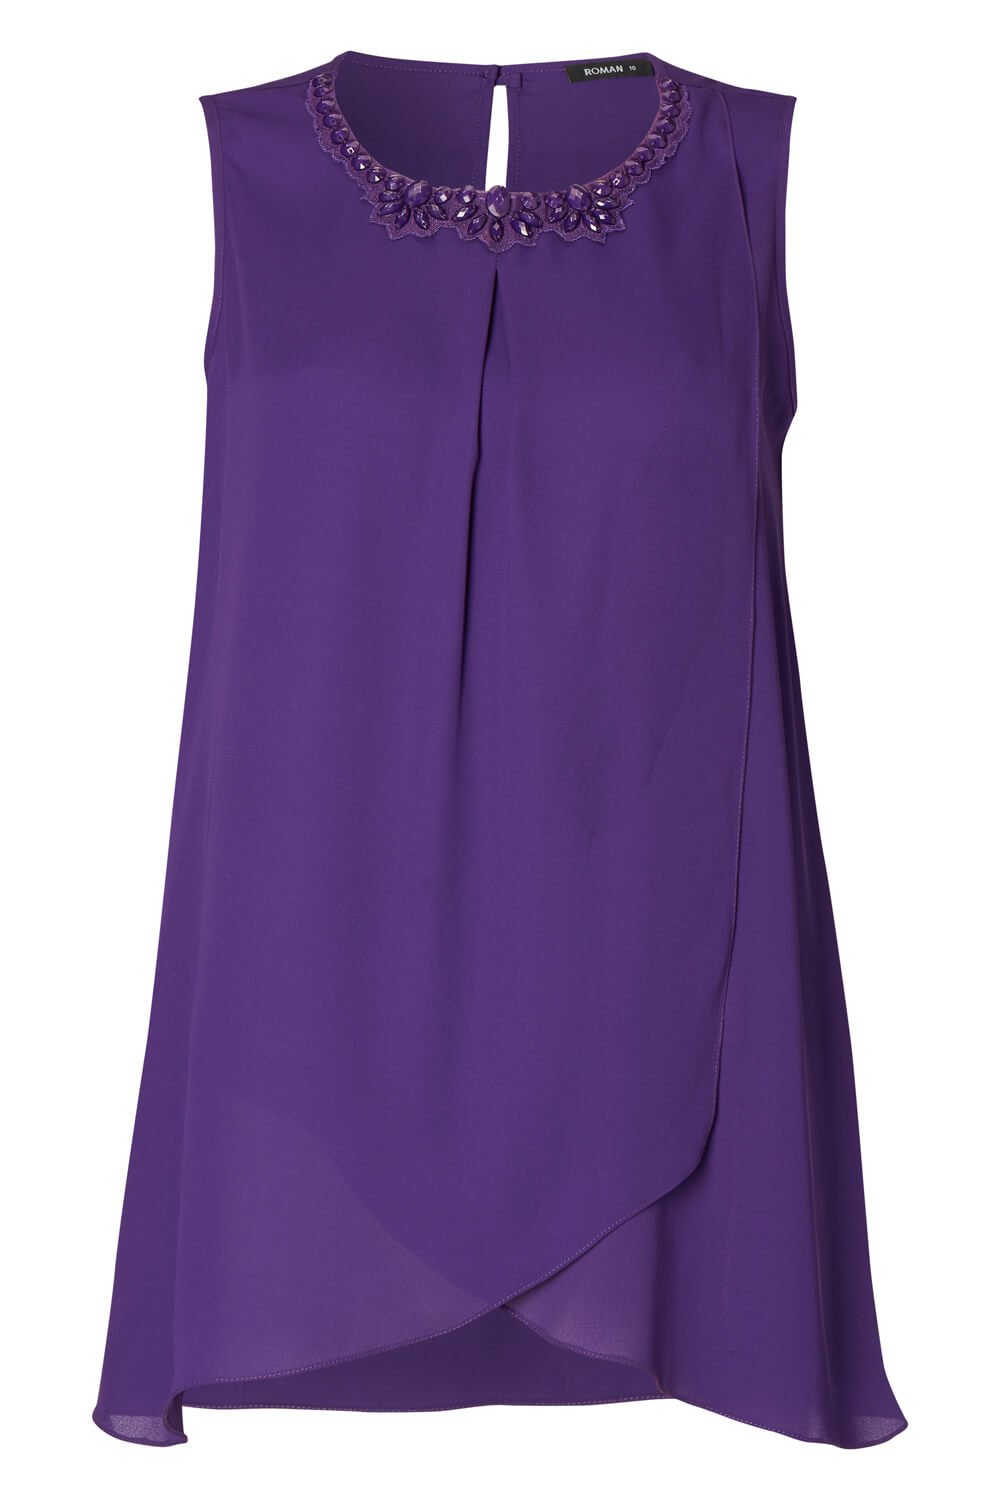 Asymmetric Top with Embellished Neckline in Purple - Roman Originals UK